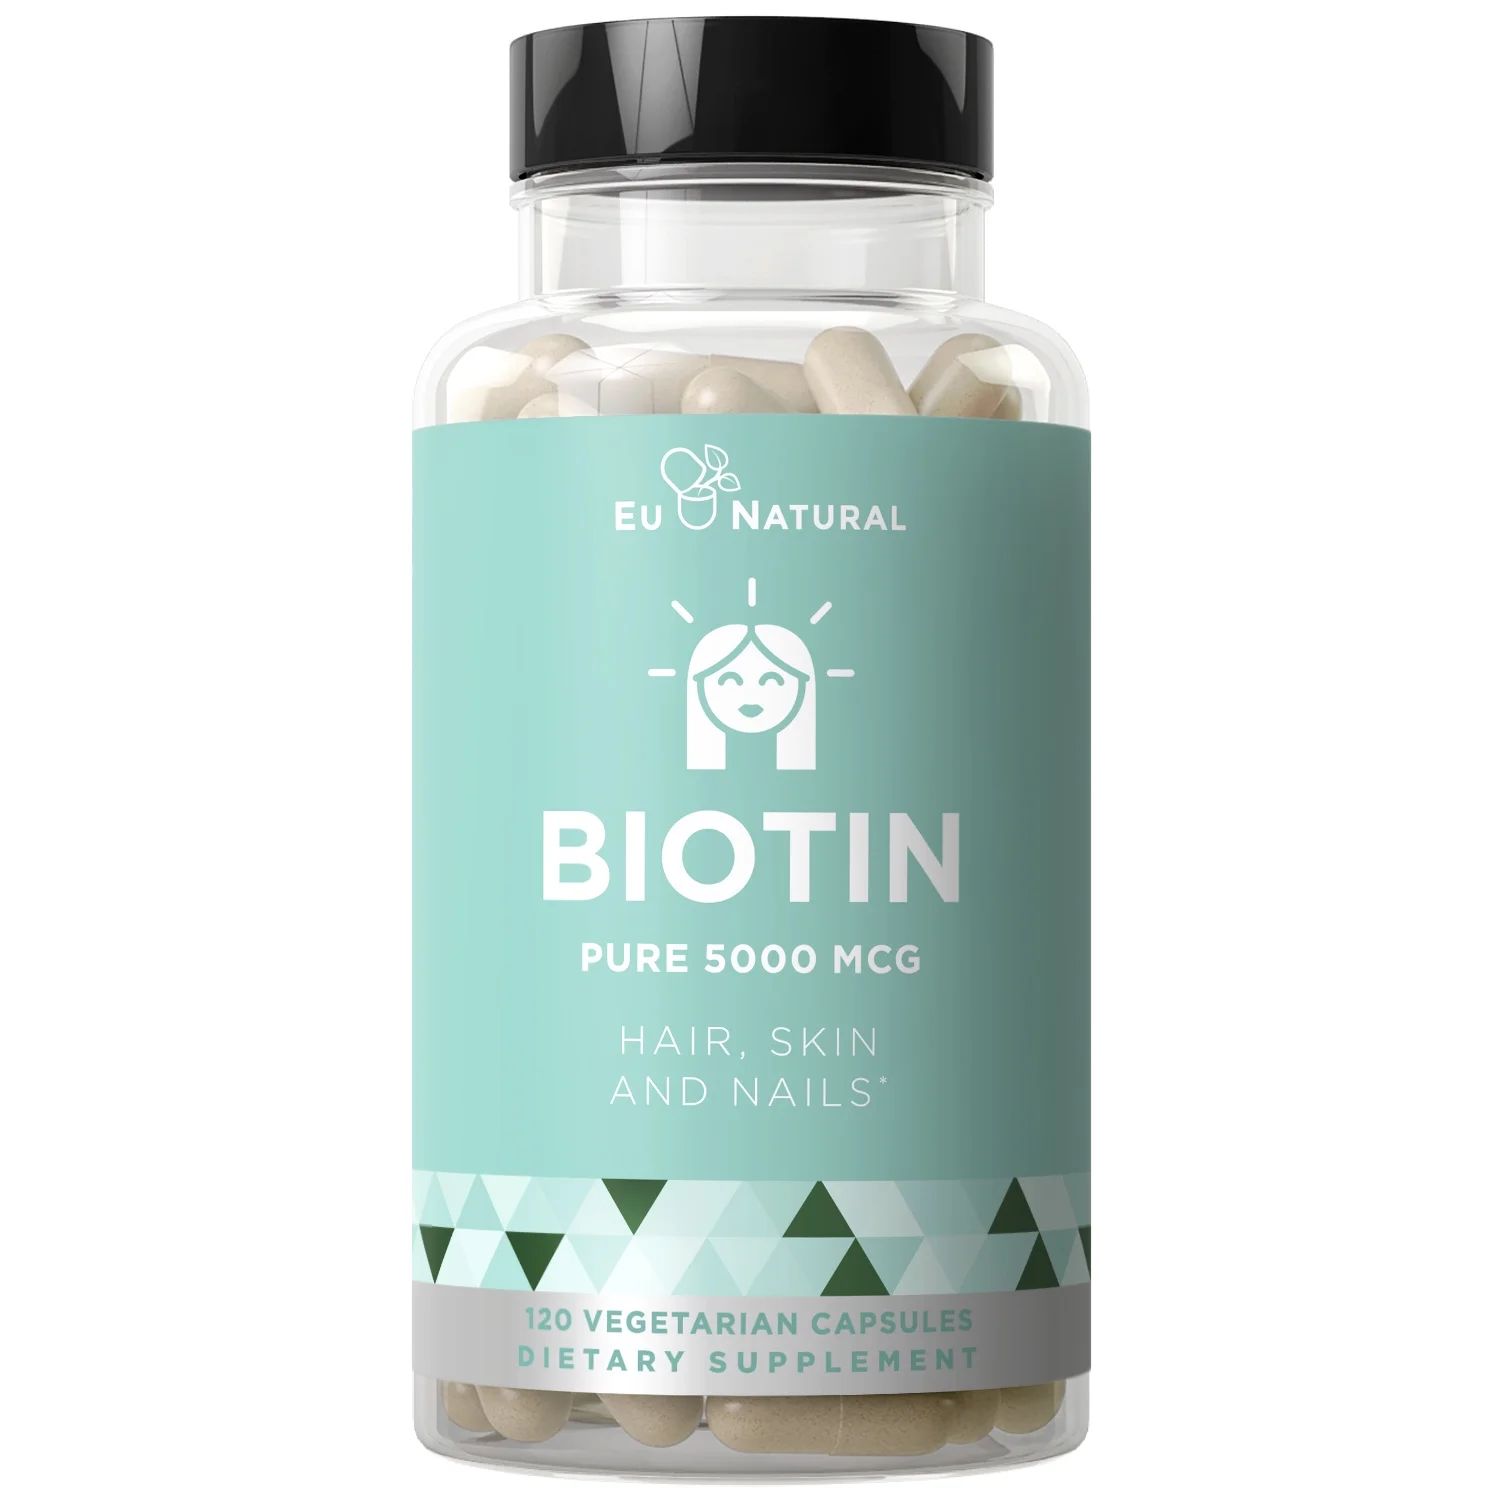 BIOTIN 5000 mcg - Healthier Hair Growth, Stronger Nails, Glowing Skin - 120 Vegetarian Soft Capsu... | Walmart (US)